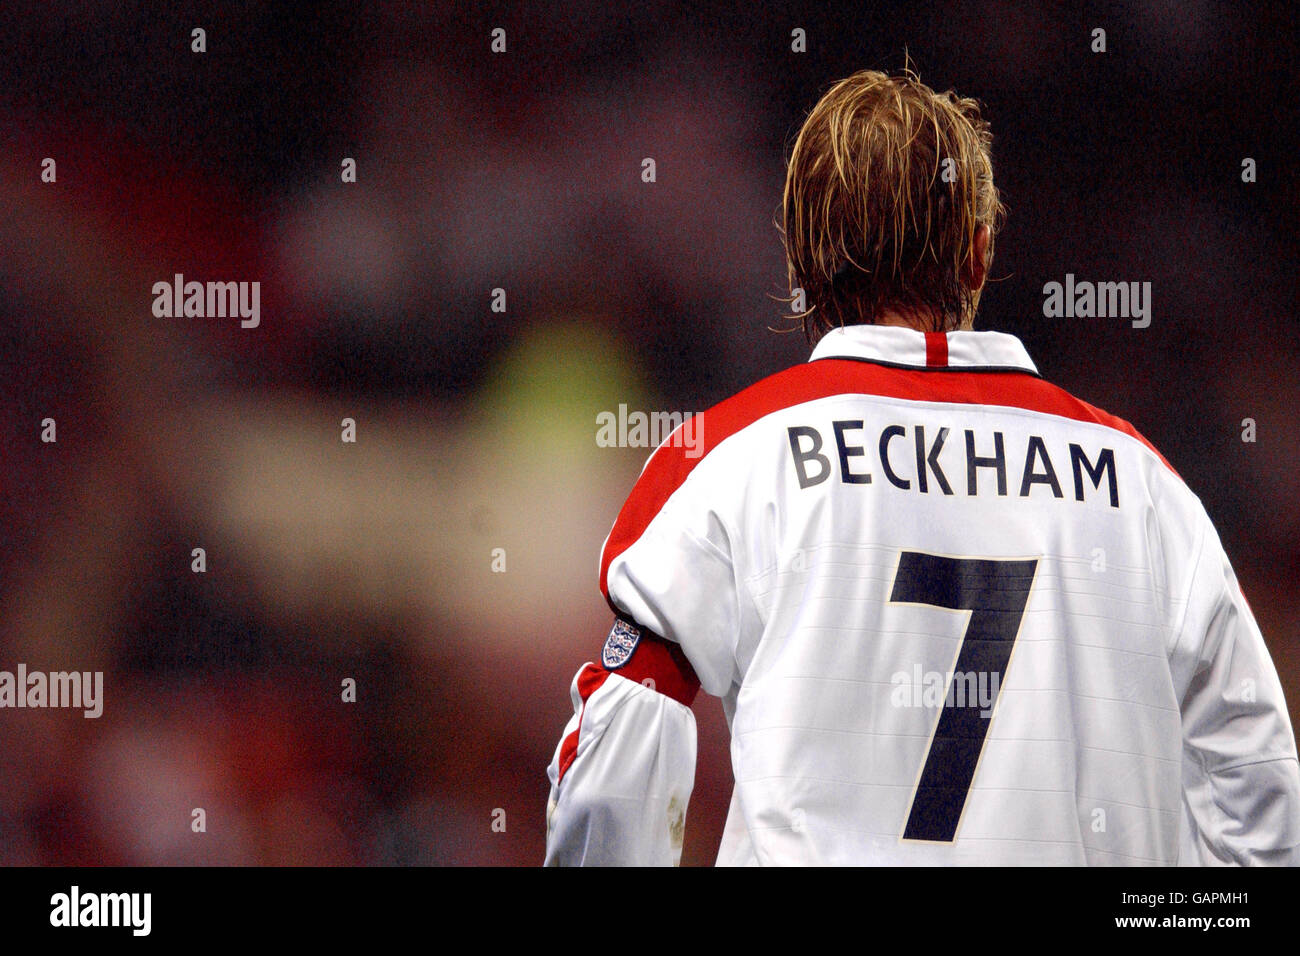 Beckham england 7 shirt hi-res stock photography and images - Alamy